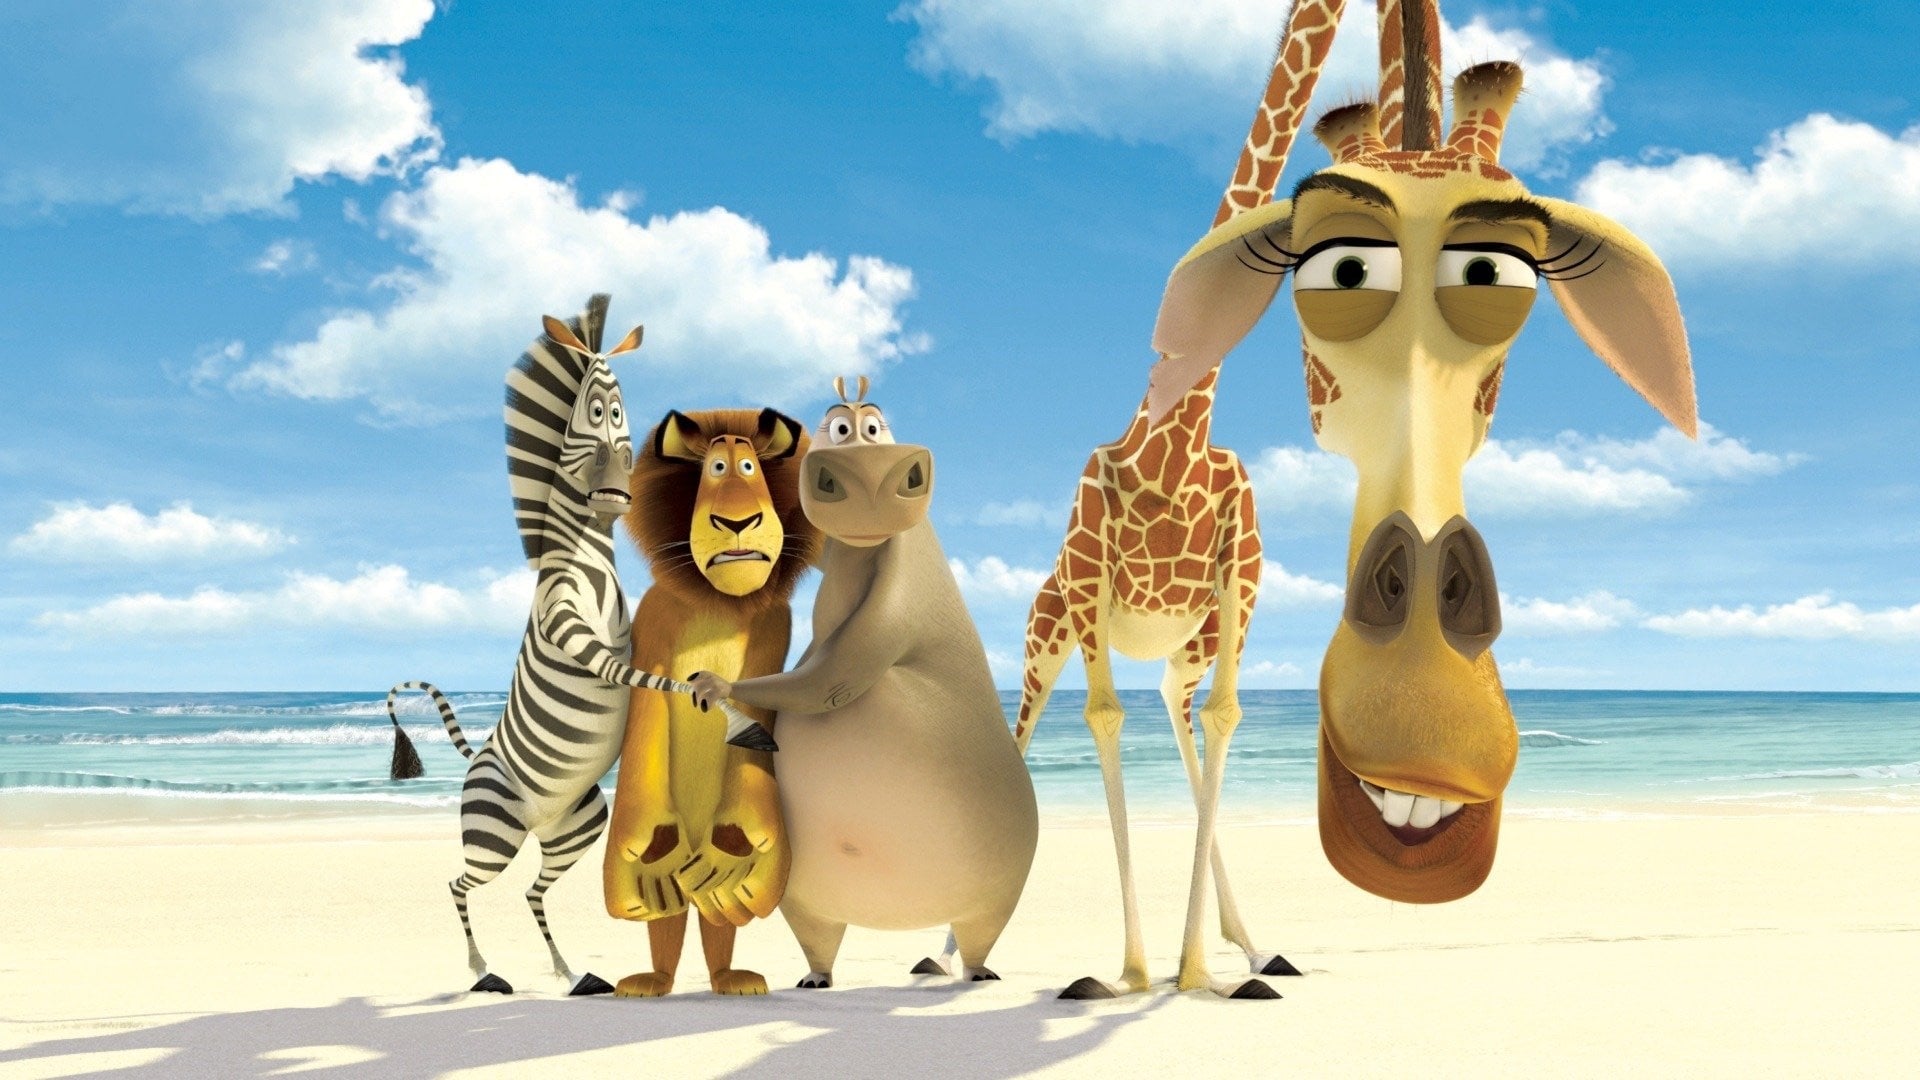 Madagascar มาดากัสการ์